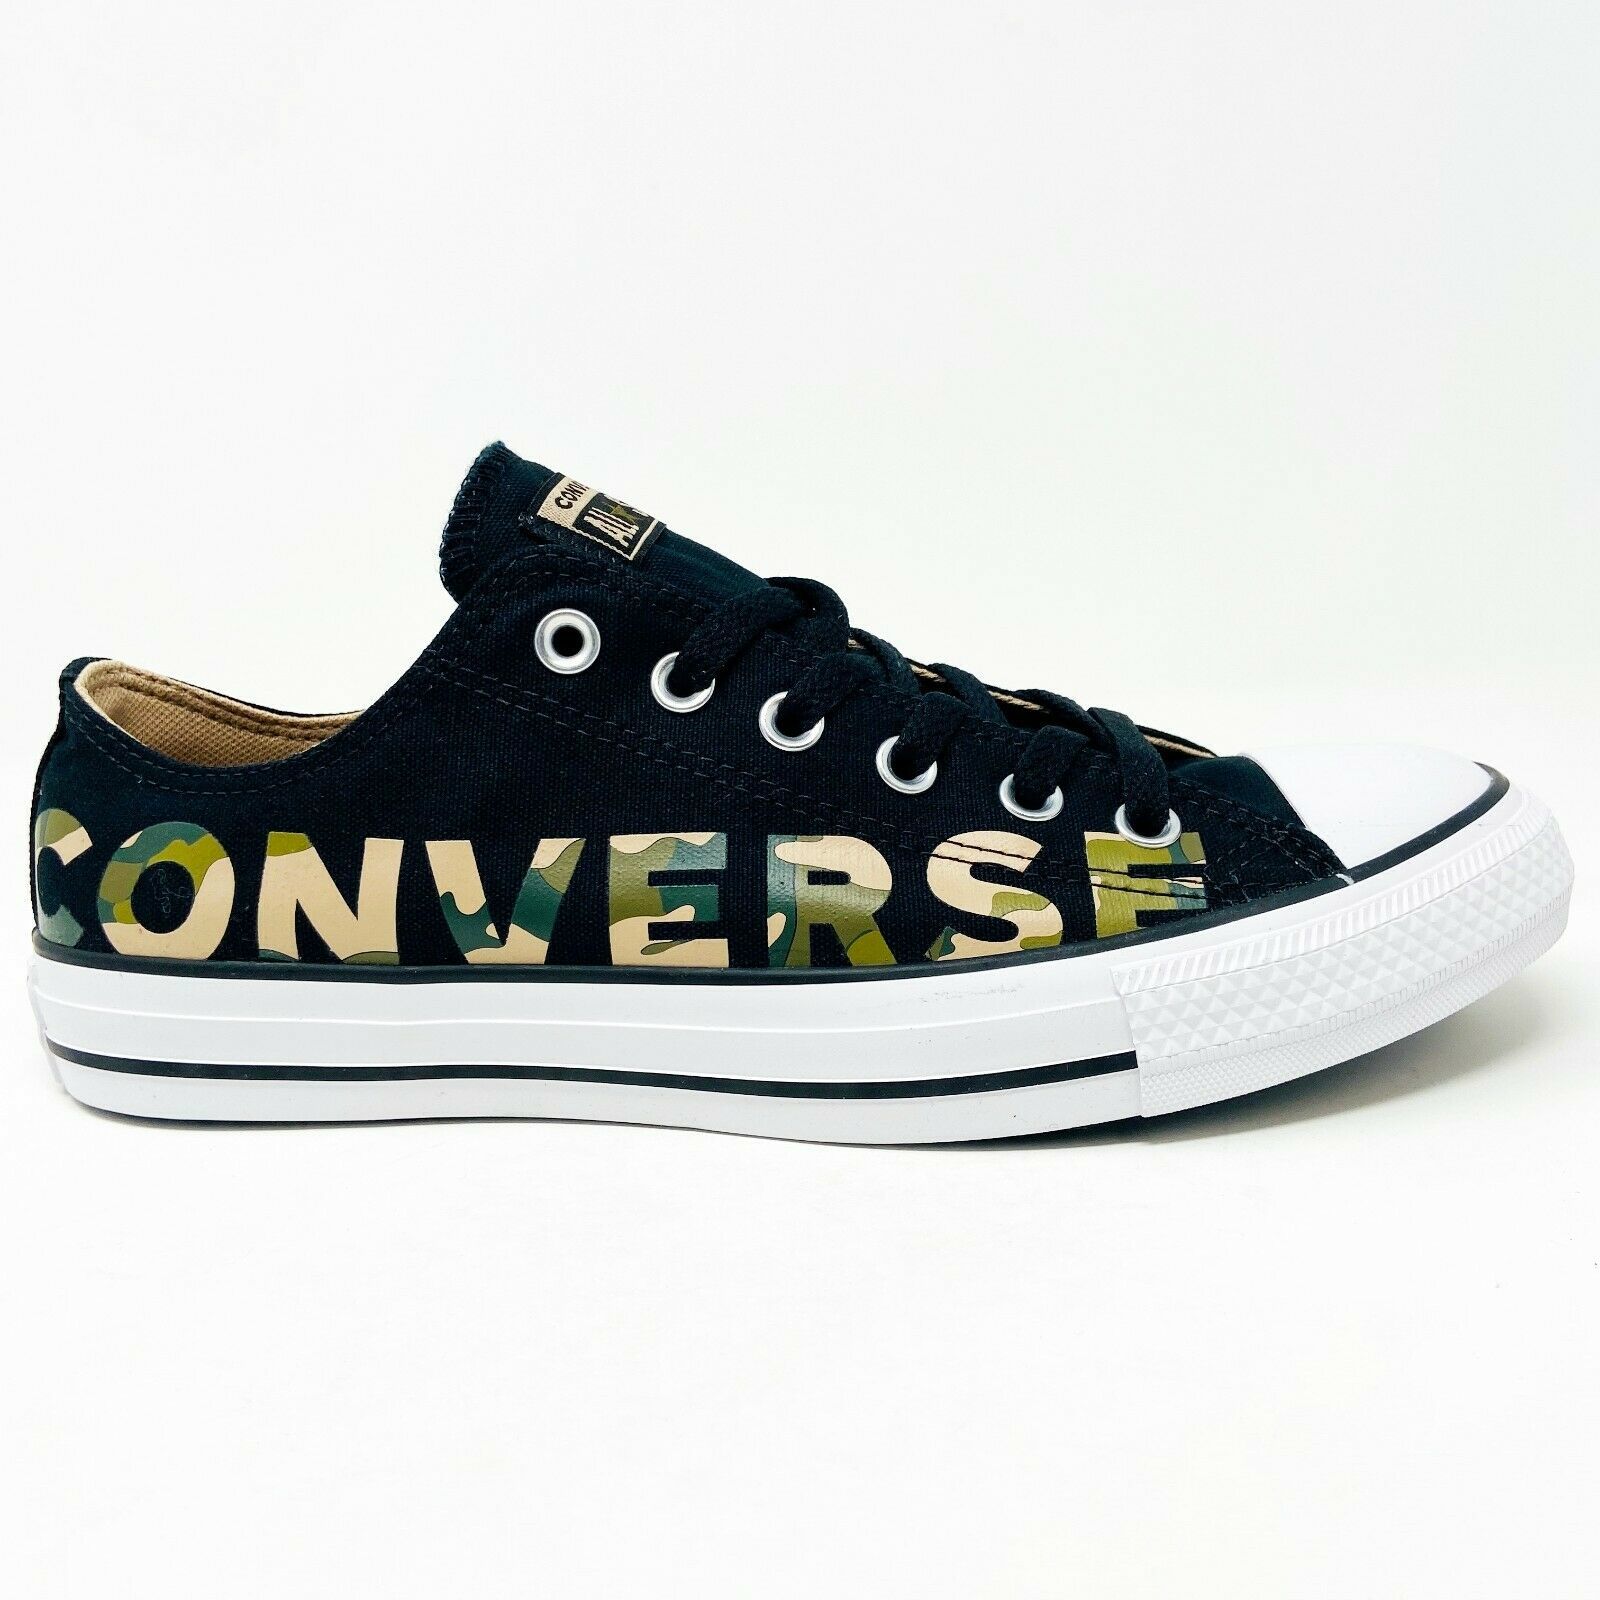 Converse Chuck Taylor All Star Ox Camo Black Logo Mens Sneakers 166234F